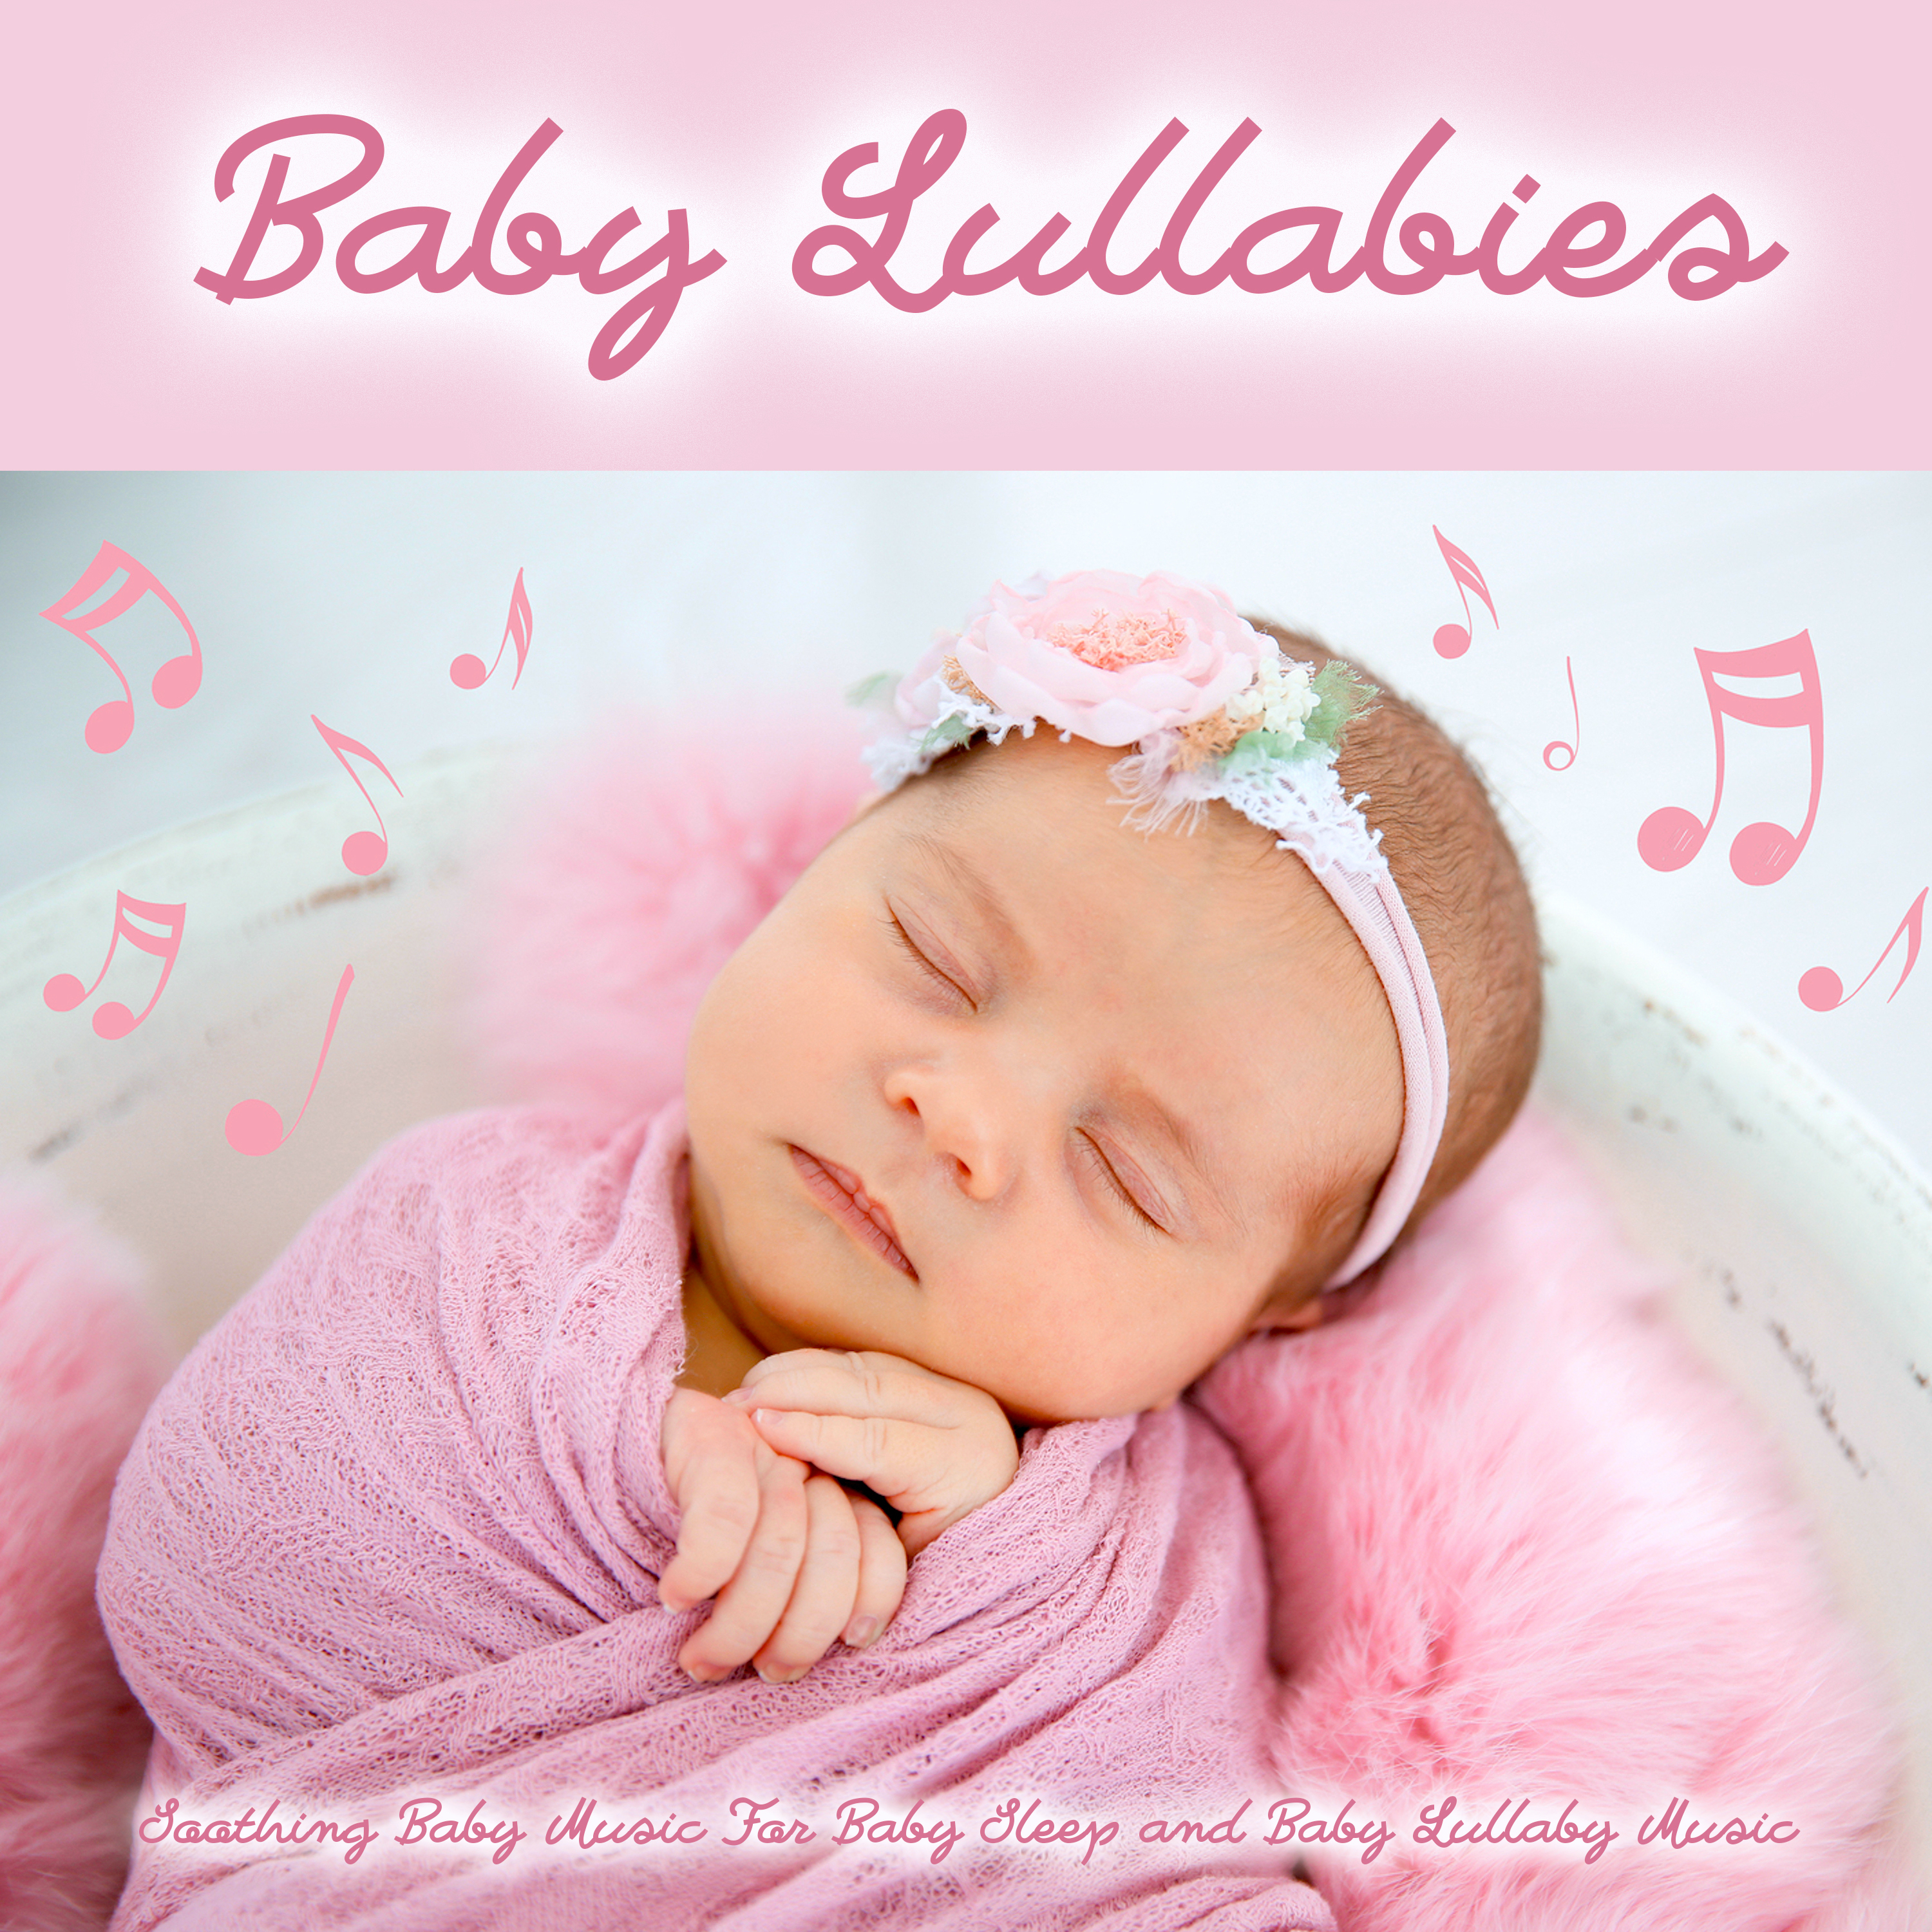 Baby Sleep Music With Rain Sounds